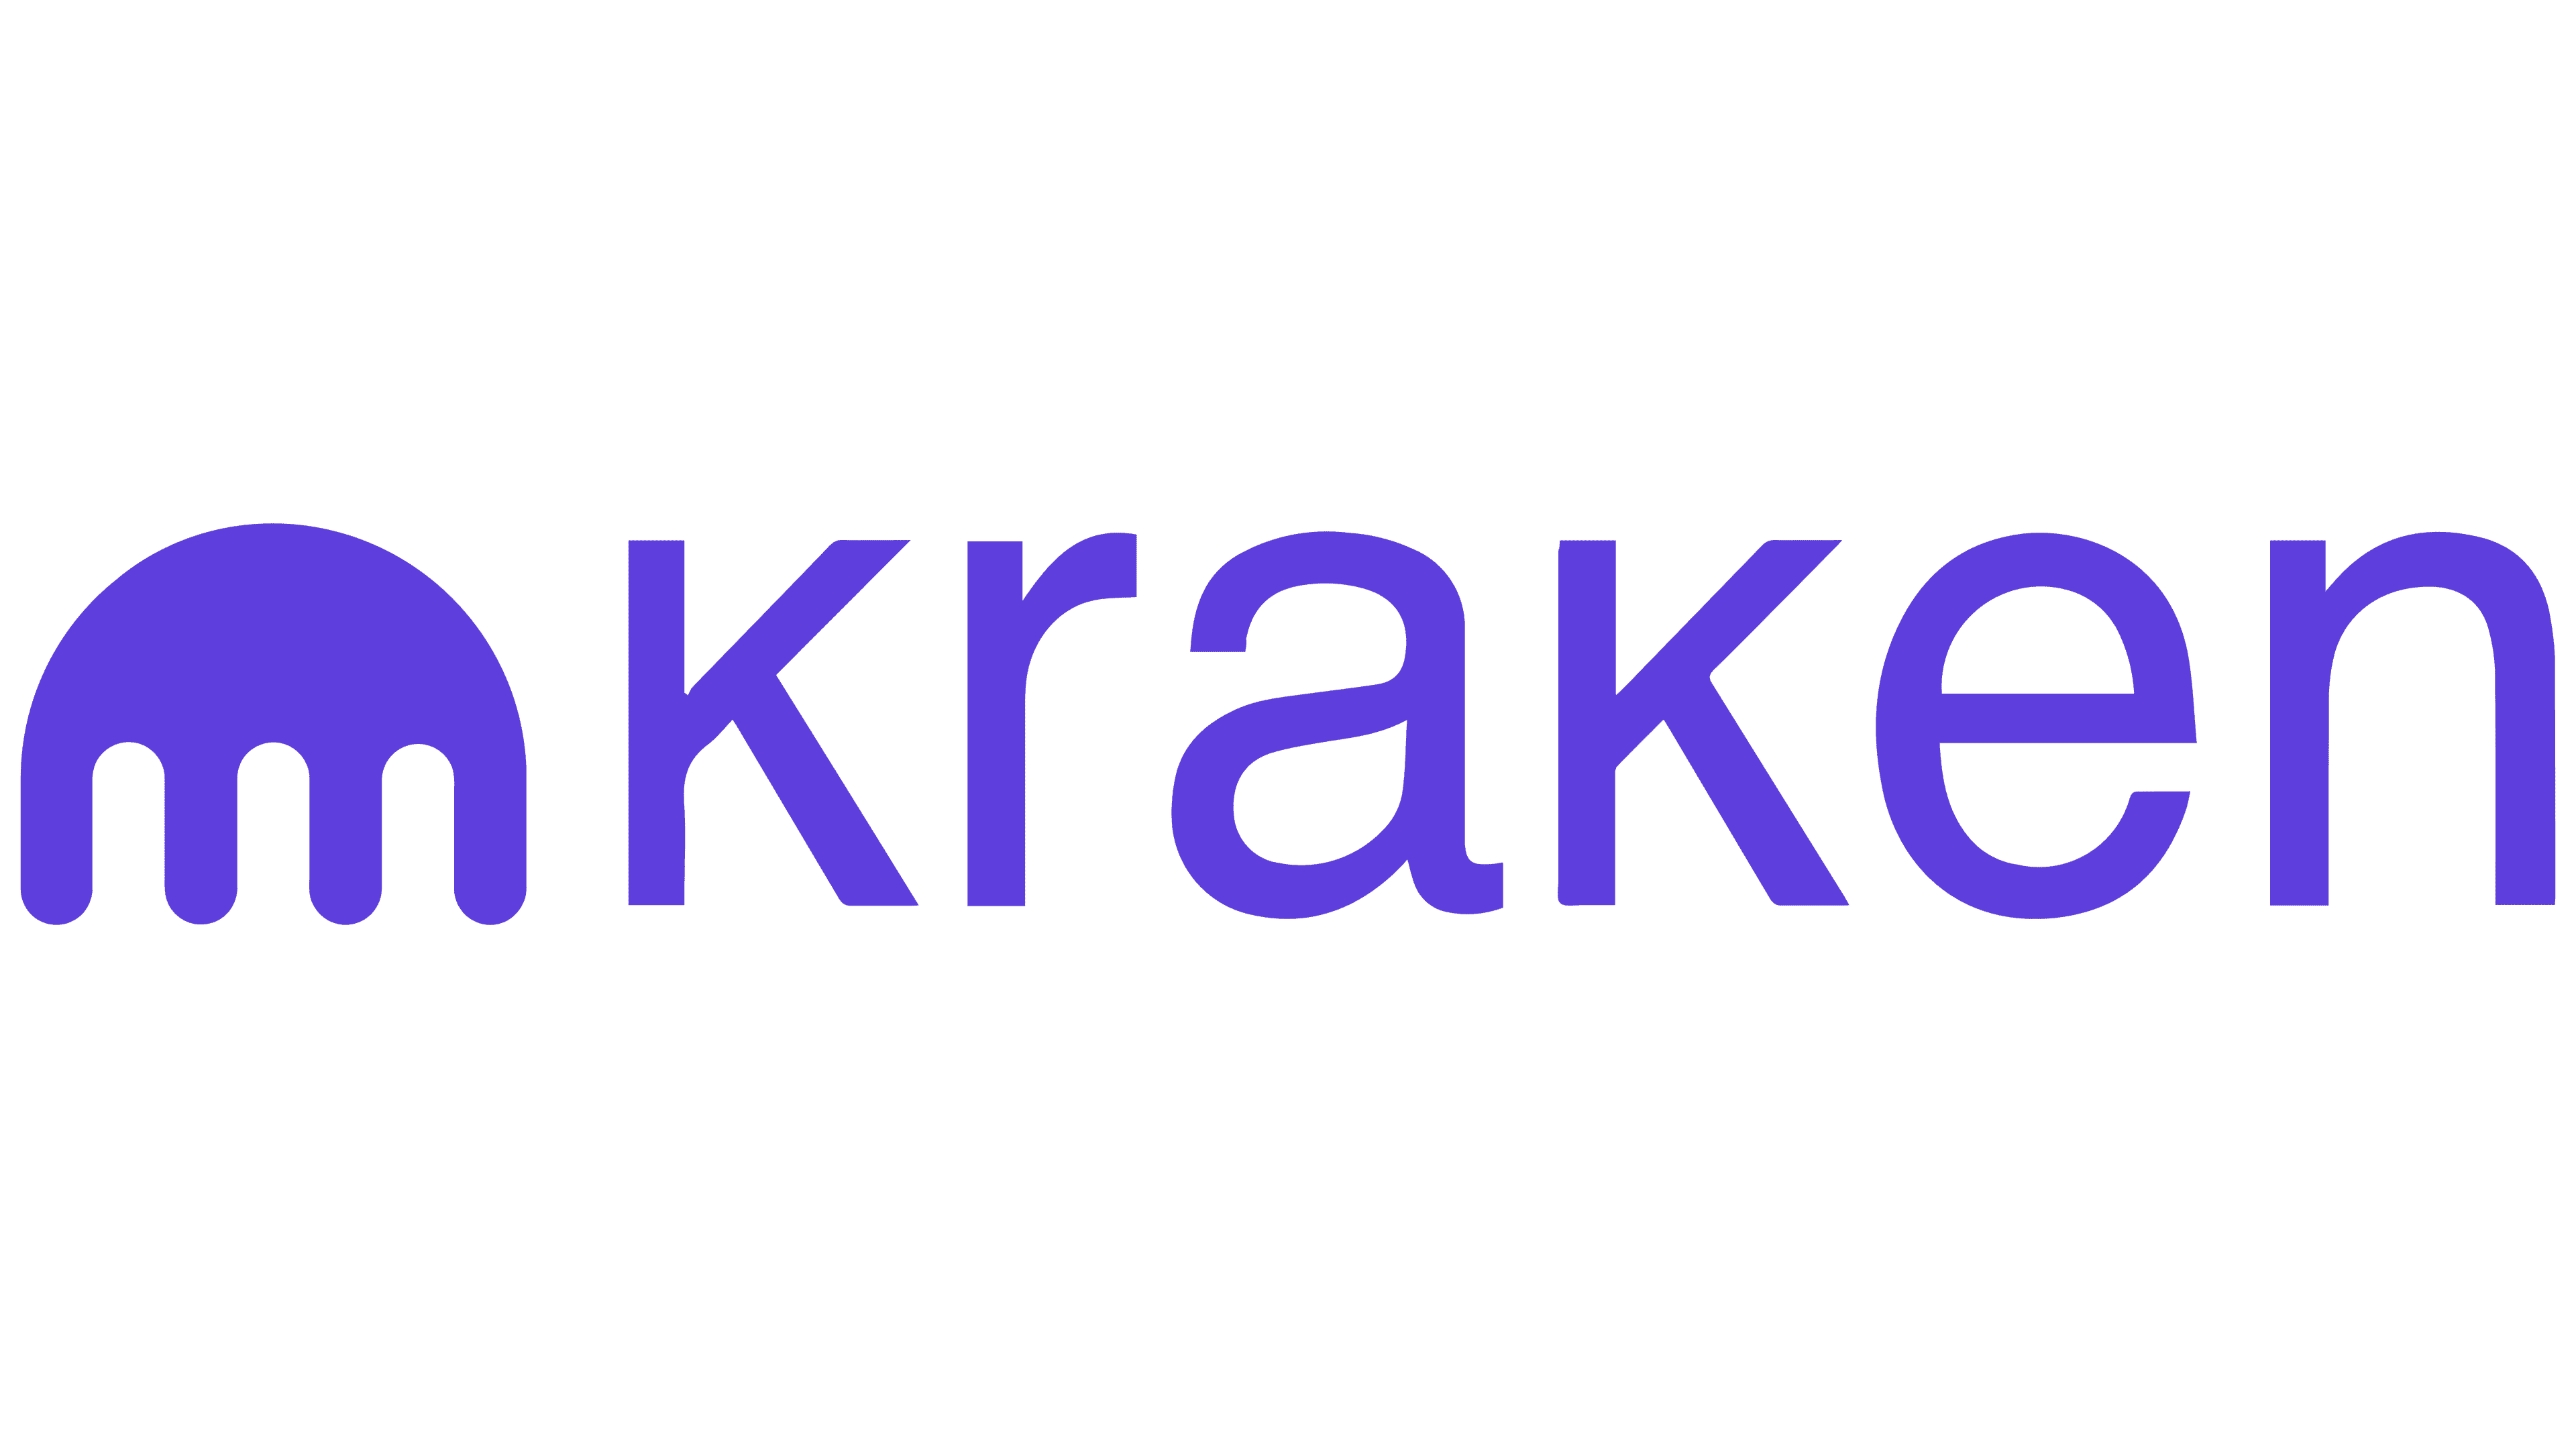 Trade altcoins on leverage using the Kraken Alt Exchange